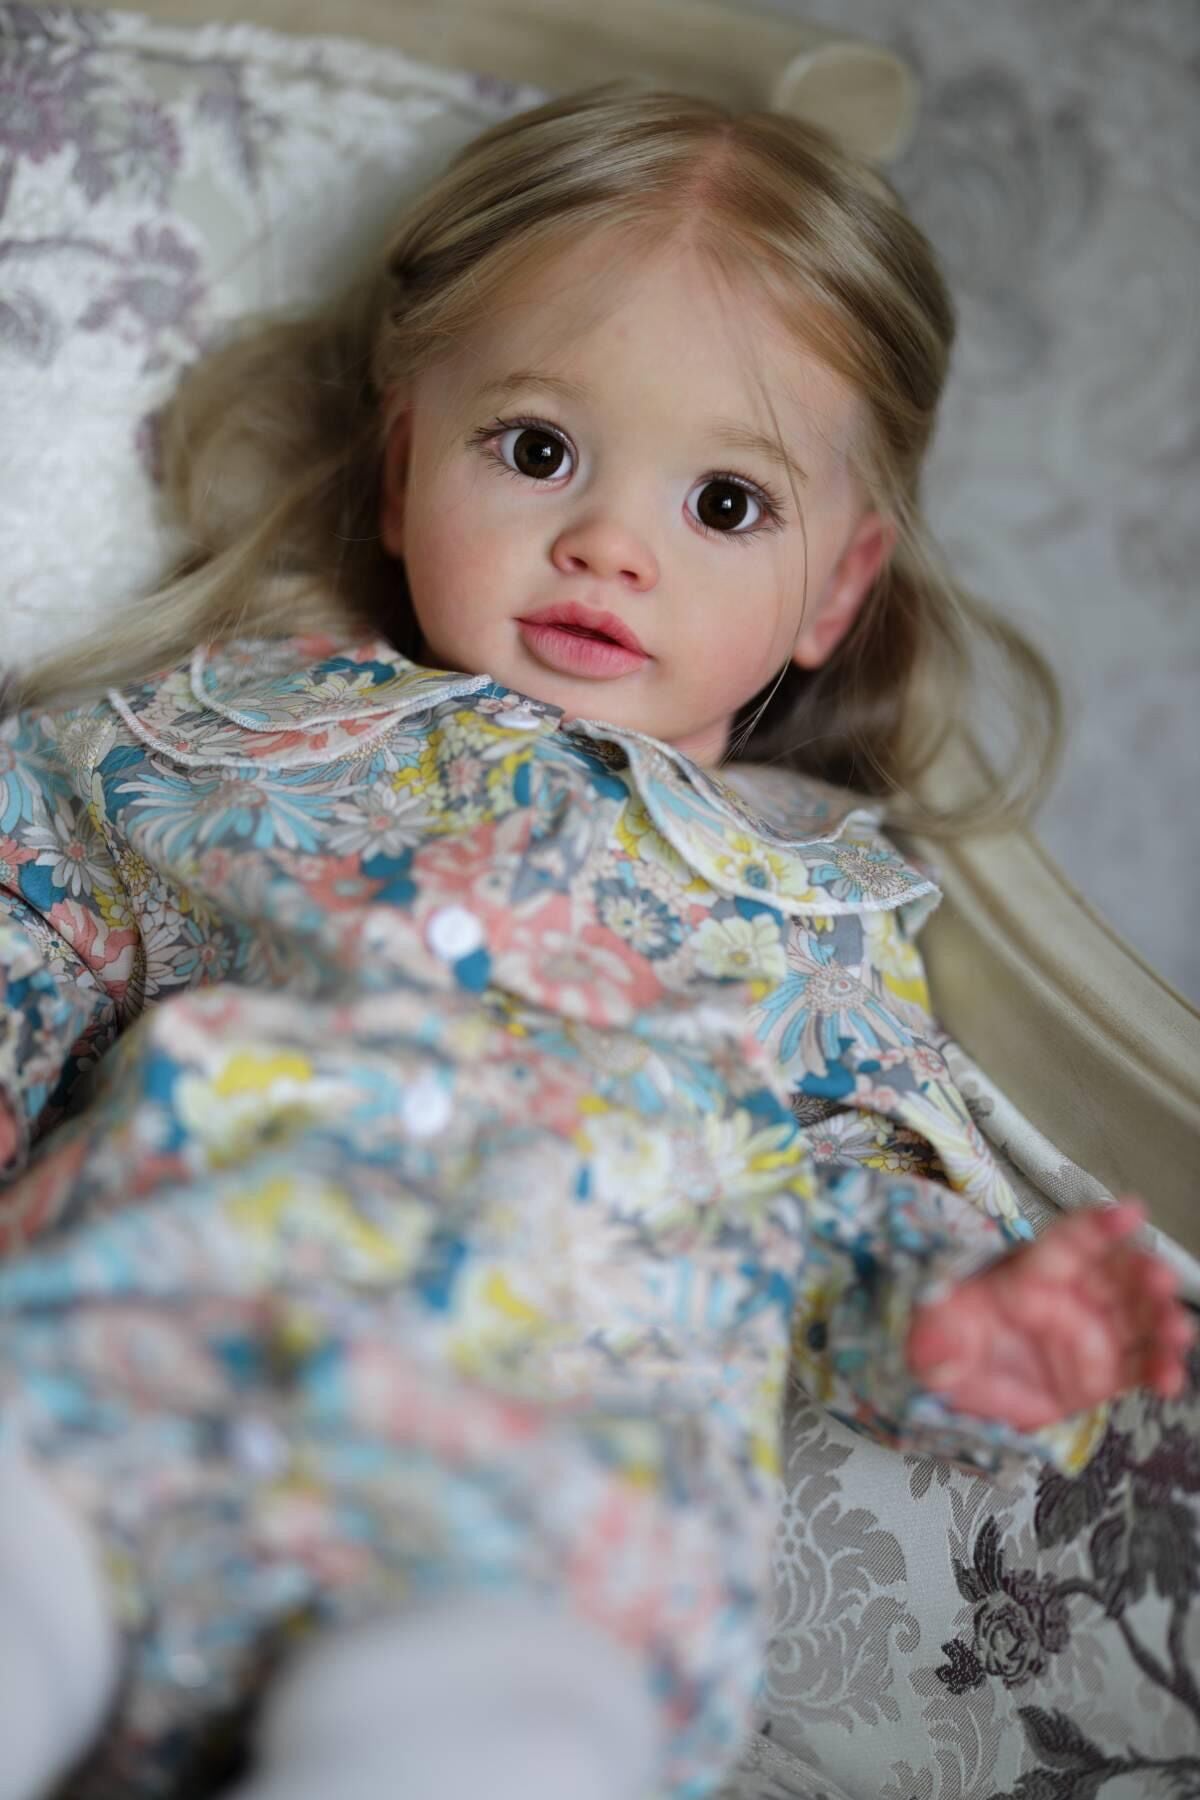 Lifelike Reborn Baby Dolls That Look Real 26 Inch Reborn Toddler